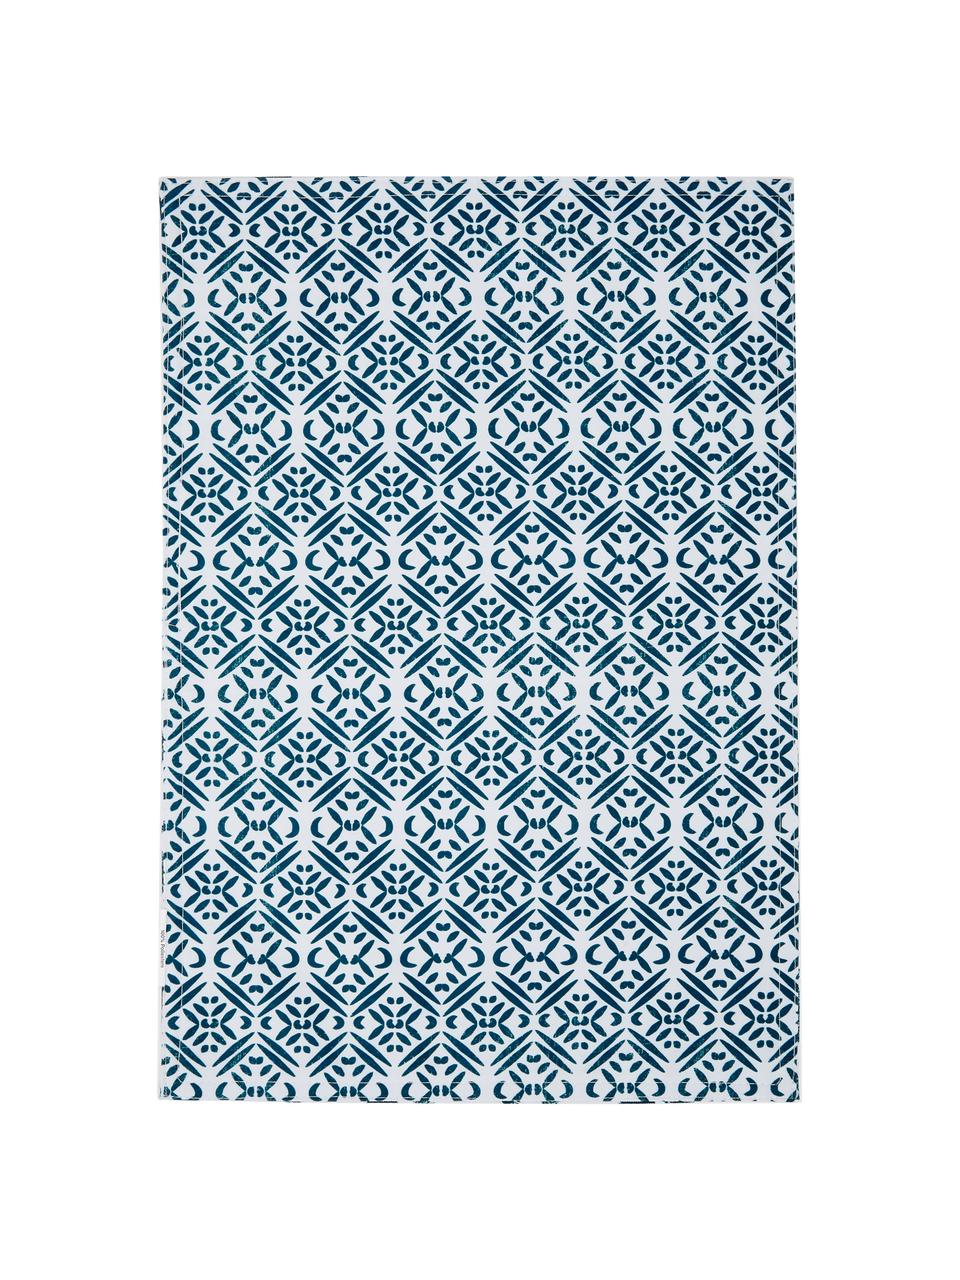 Waterafstotende placemats Fishbone, 2 stuks, Polyester, Wit, blauwtinten, B 33 x L 48 cm